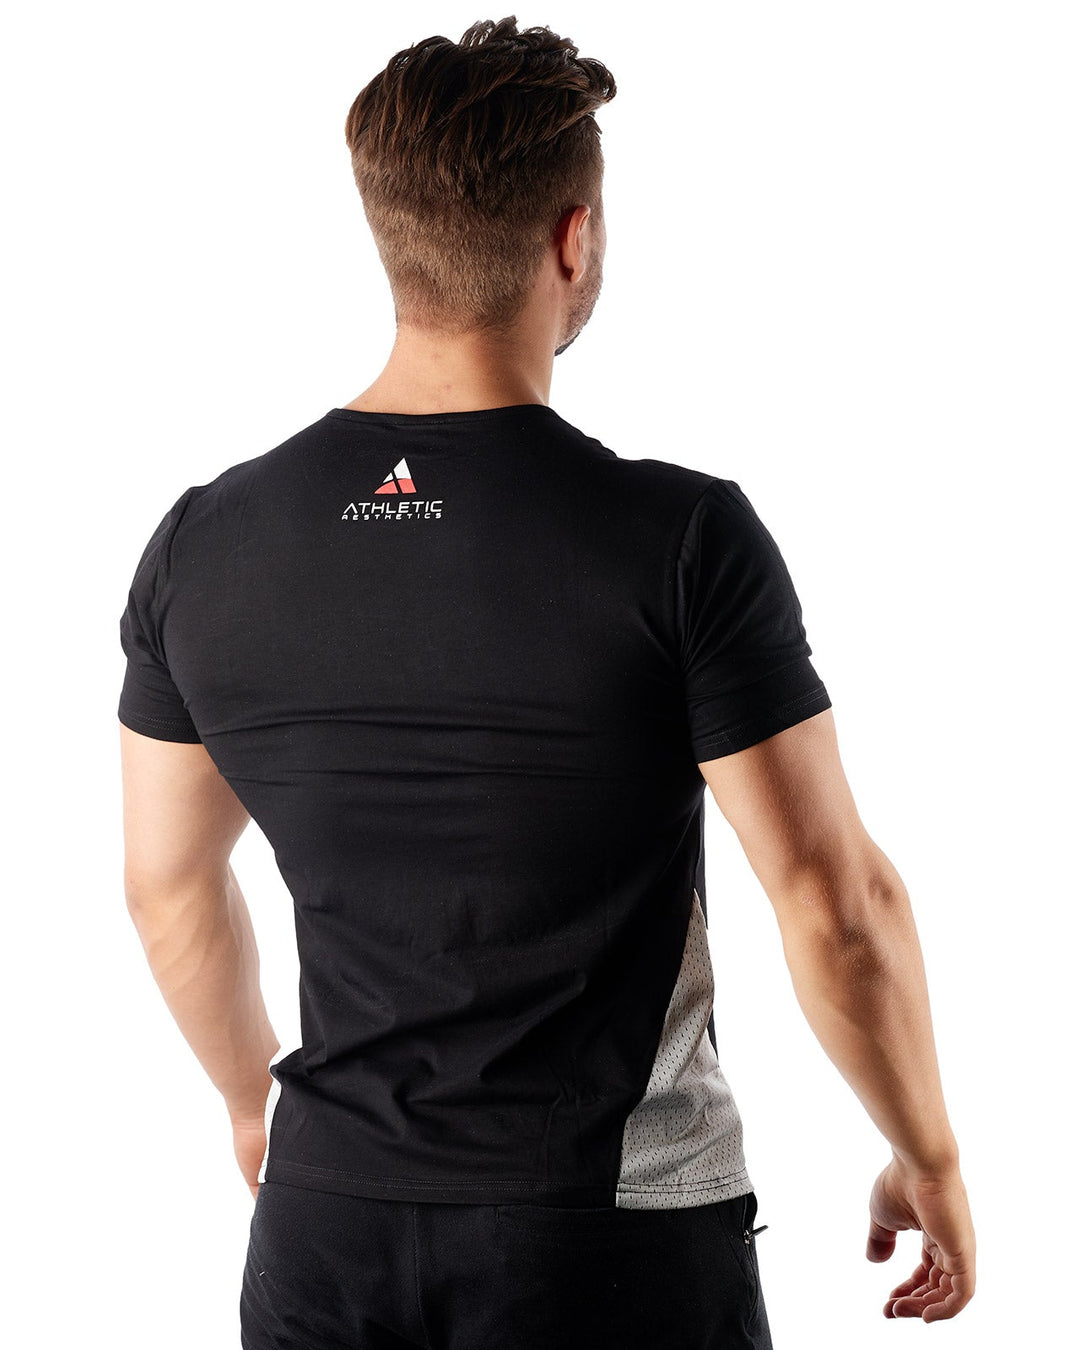 Performance Shirt (Black) - Athletic Aesthetics